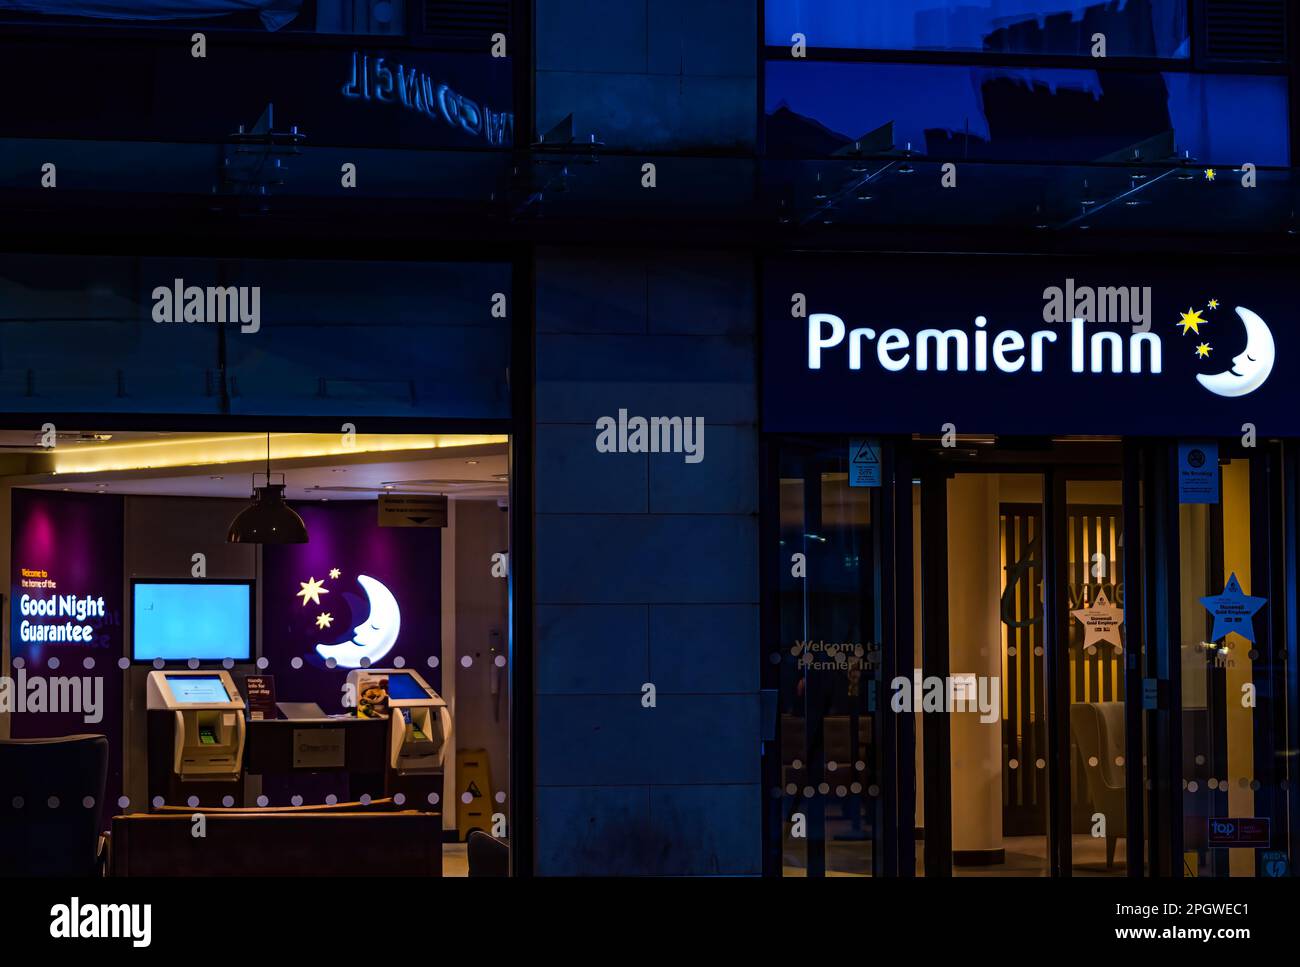 Premier Inn neon sign lit up at night, Edinburgh, Scotland, UK Stock Photo